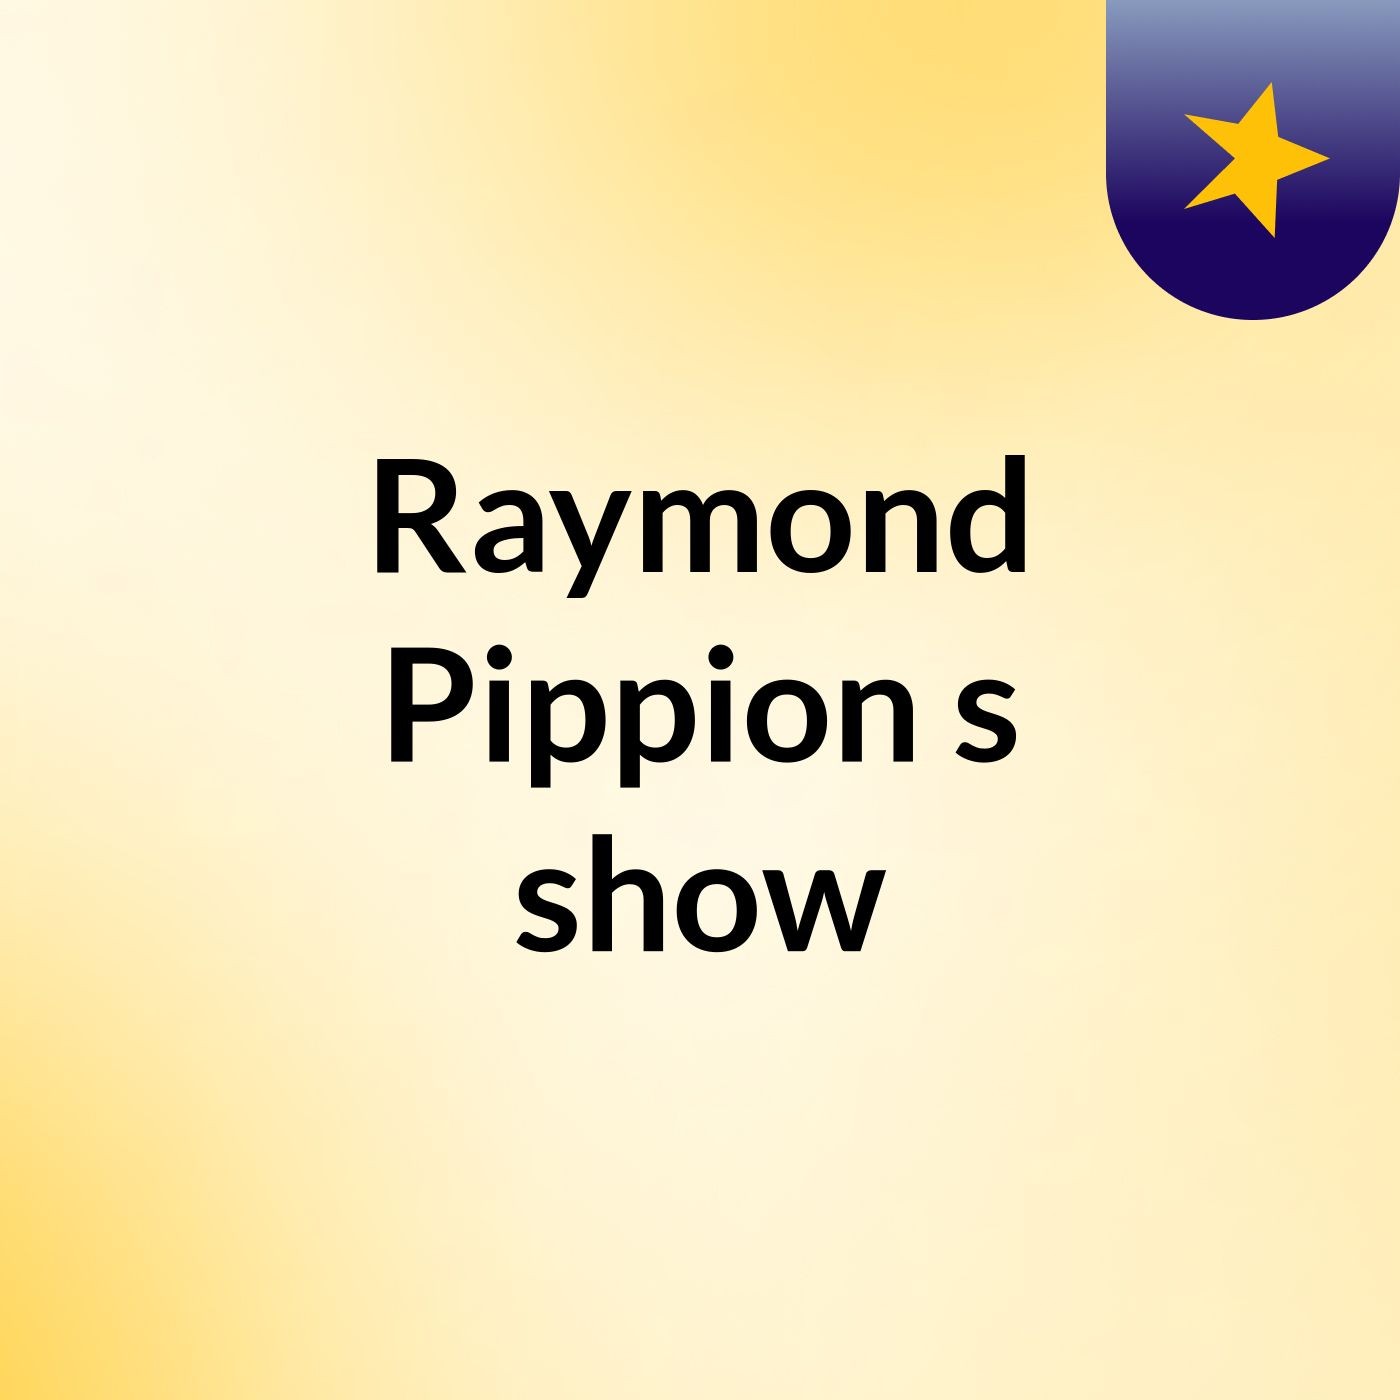 Episode 5 - Raymond Pippion's show